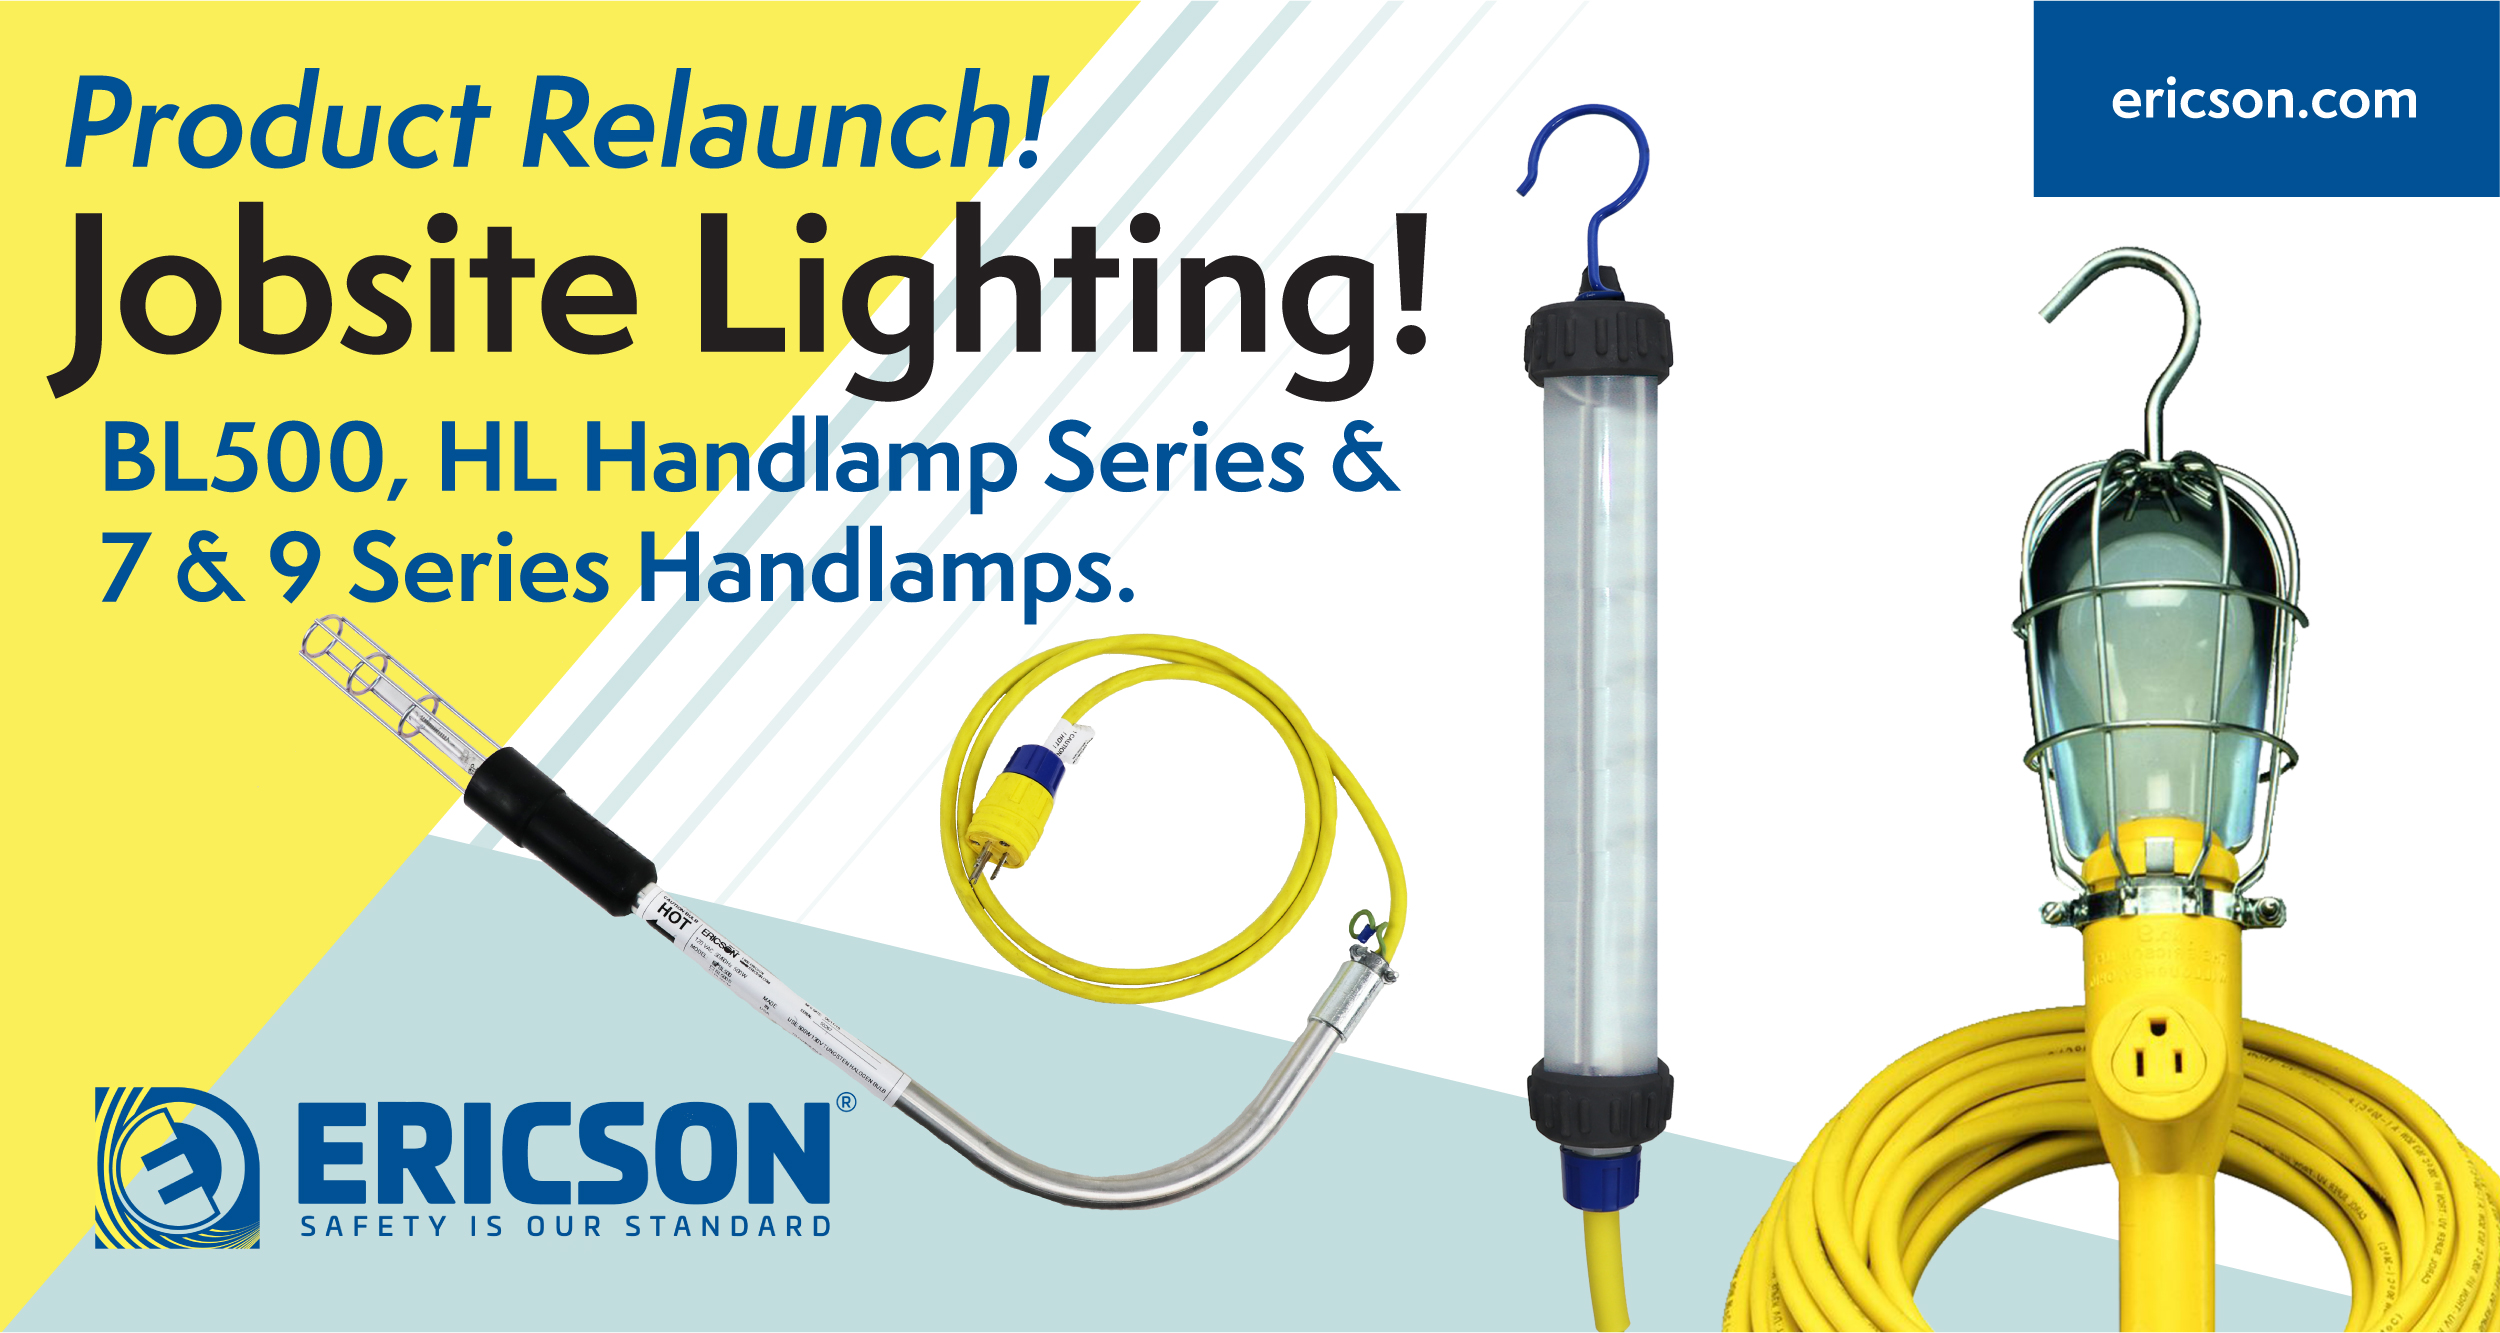 Product Relaunch - Harsh & Hazardous Lighting Solutions